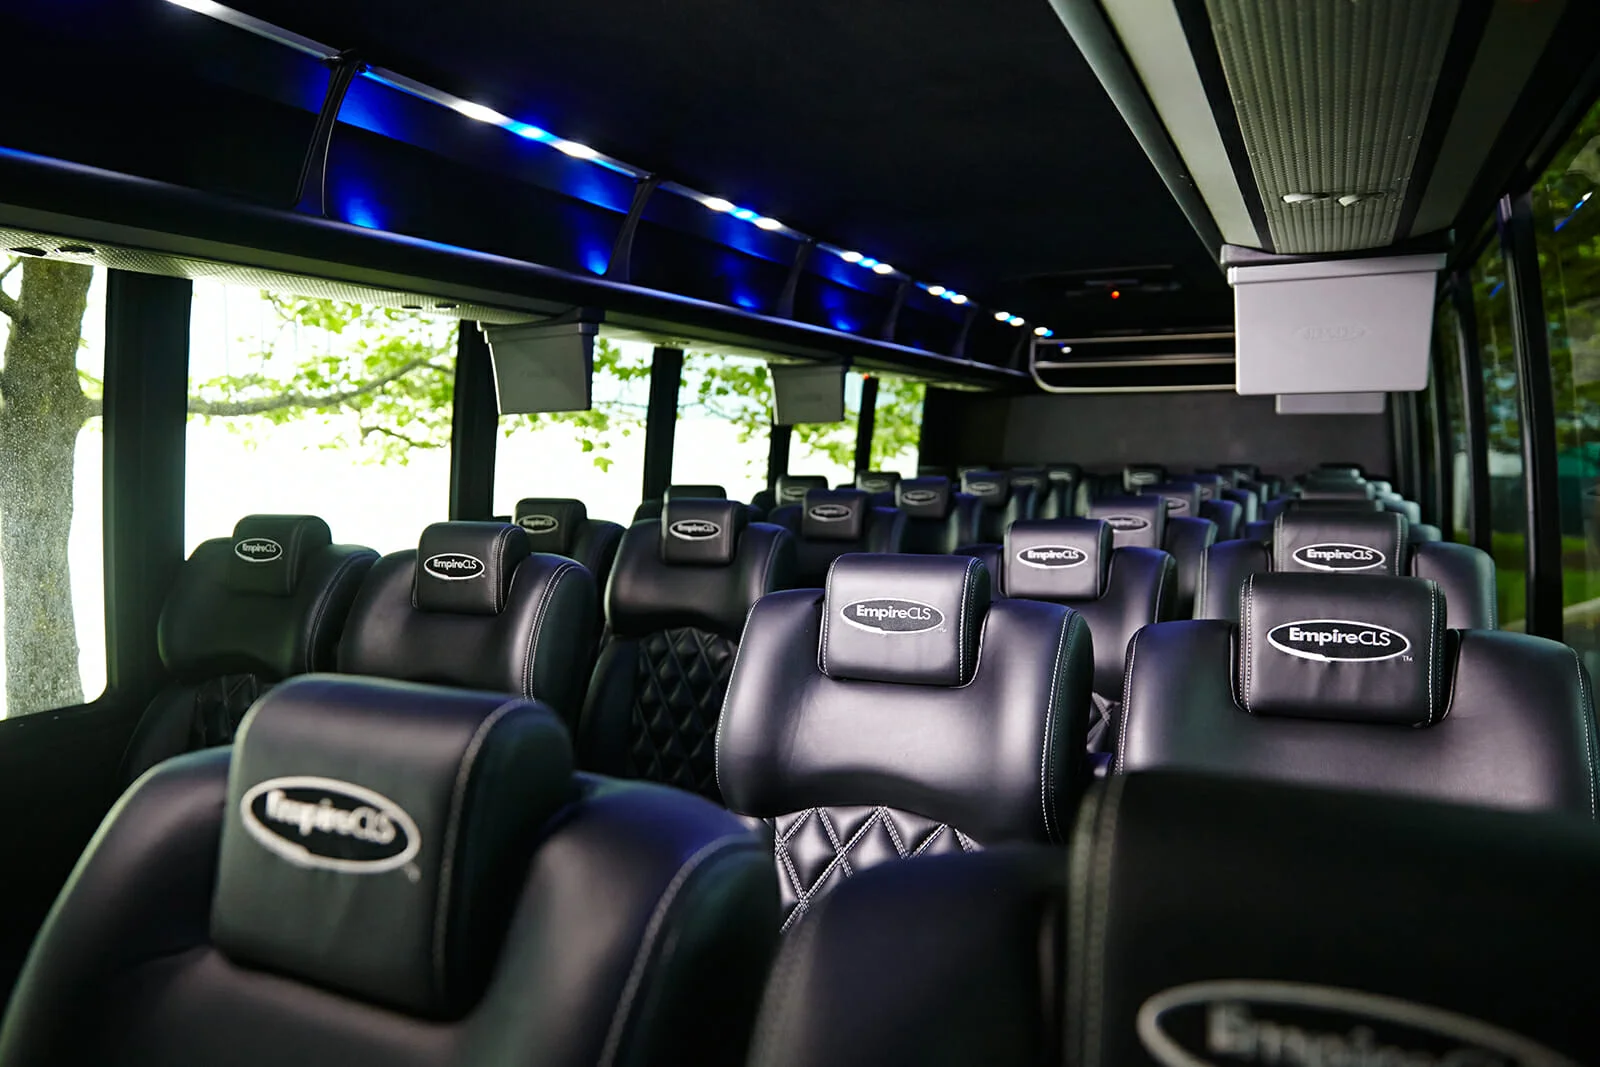 31 Passenger Mini Coach Bus